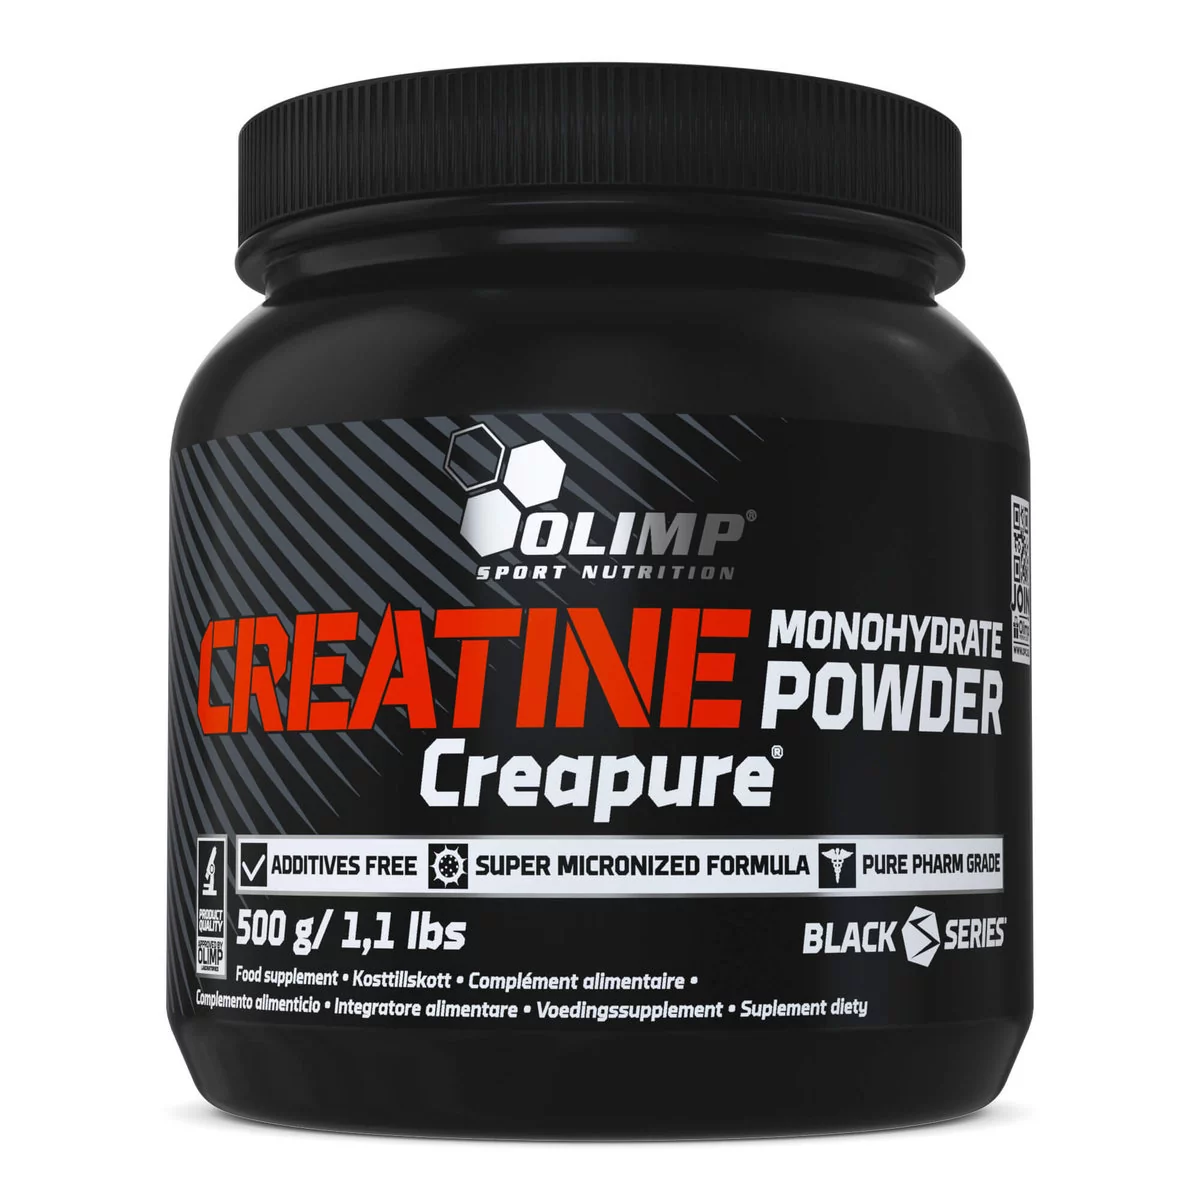 Olimp Creatine Monohydrate Powder Creapure - 500g 82